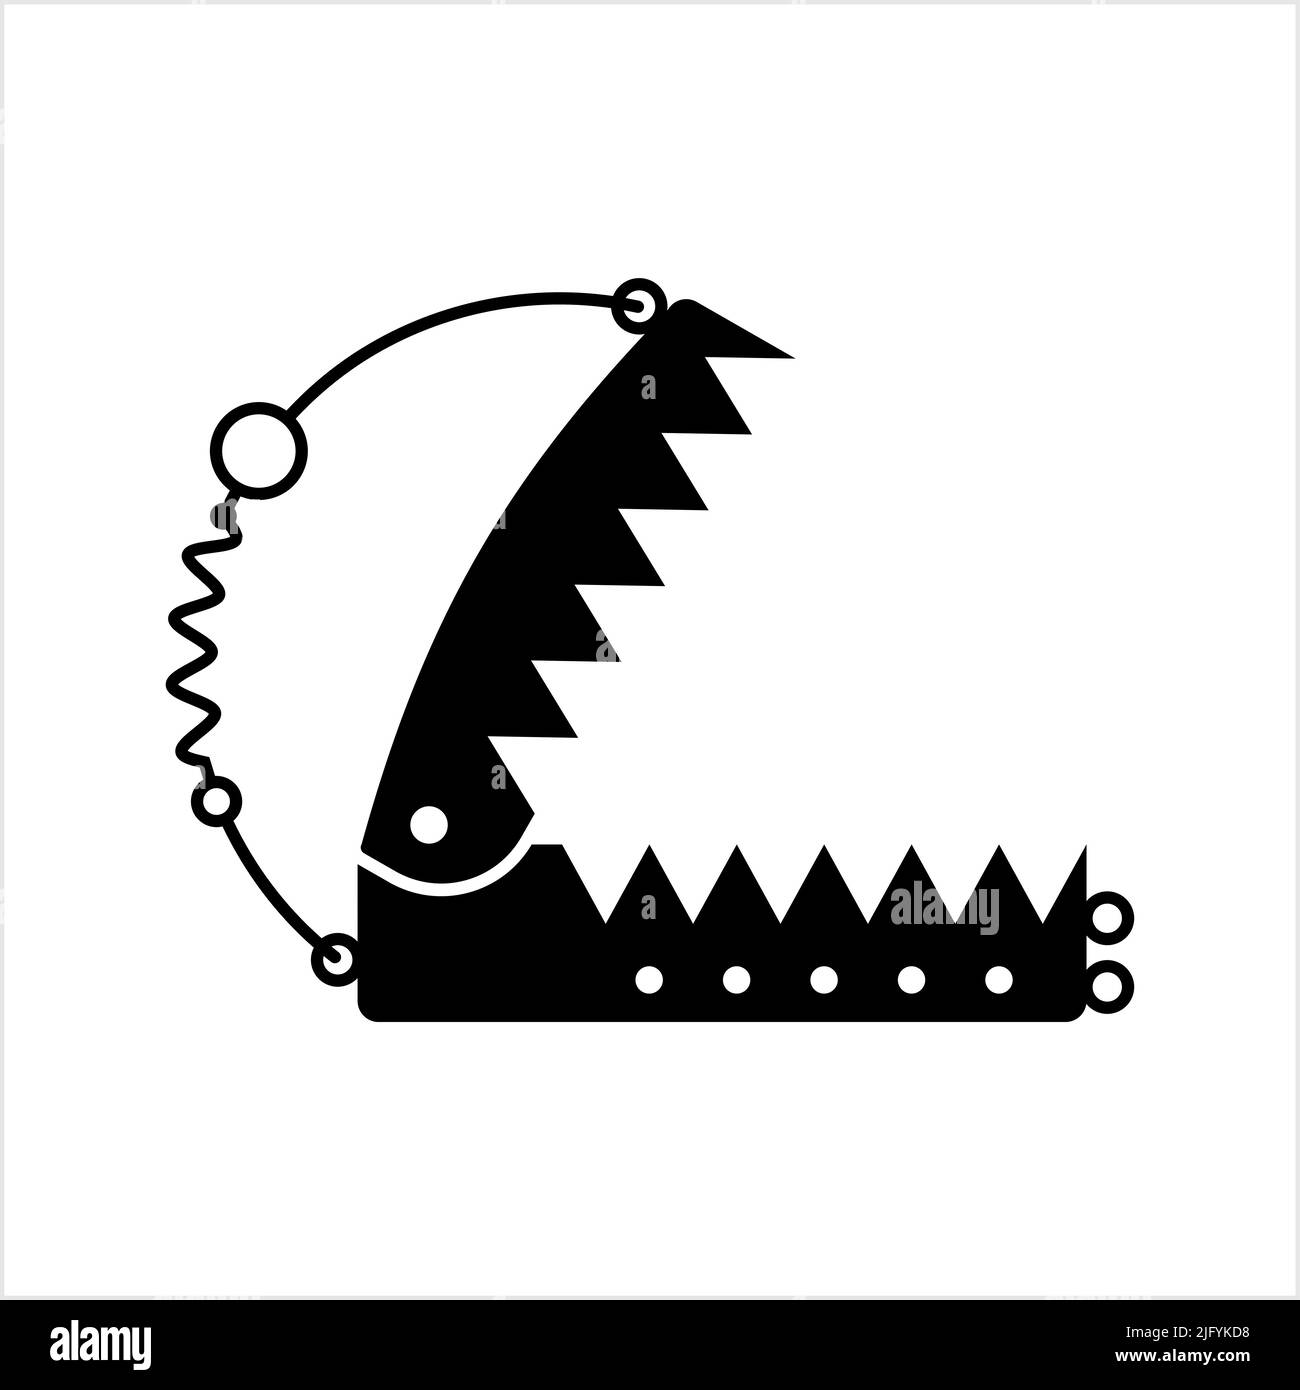 https://c8.alamy.com/comp/2JFYKD8/animal-trap-icon-animal-catching-trap-vector-art-illustration-2JFYKD8.jpg